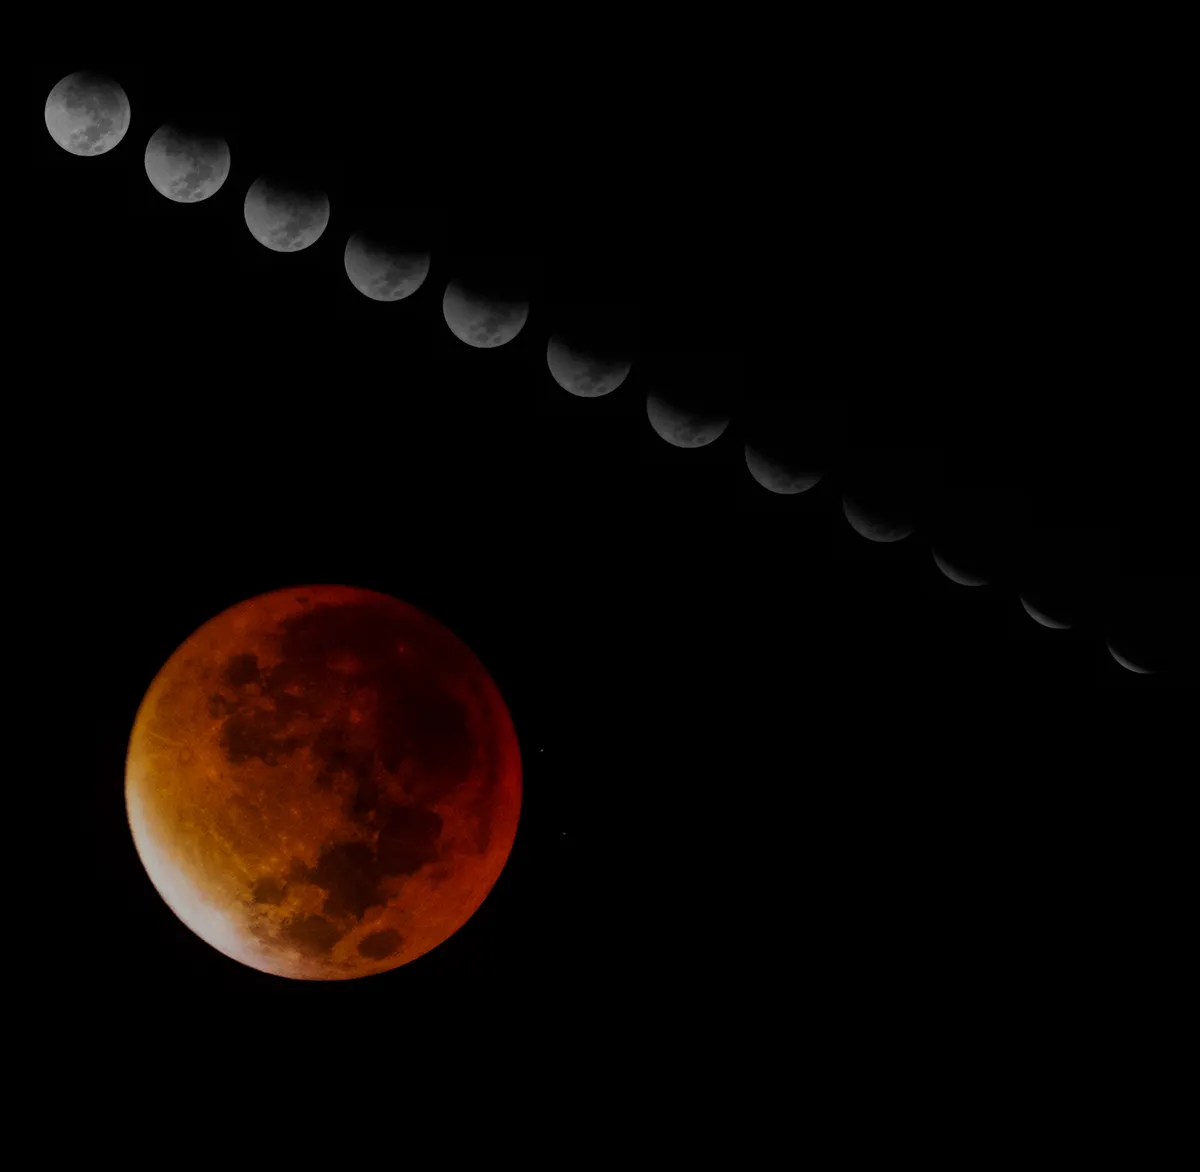 Lunar Eclipse (28/09/2015) by Stephen Charnock, Farndon, Newark, Nottinghamshire, UK.